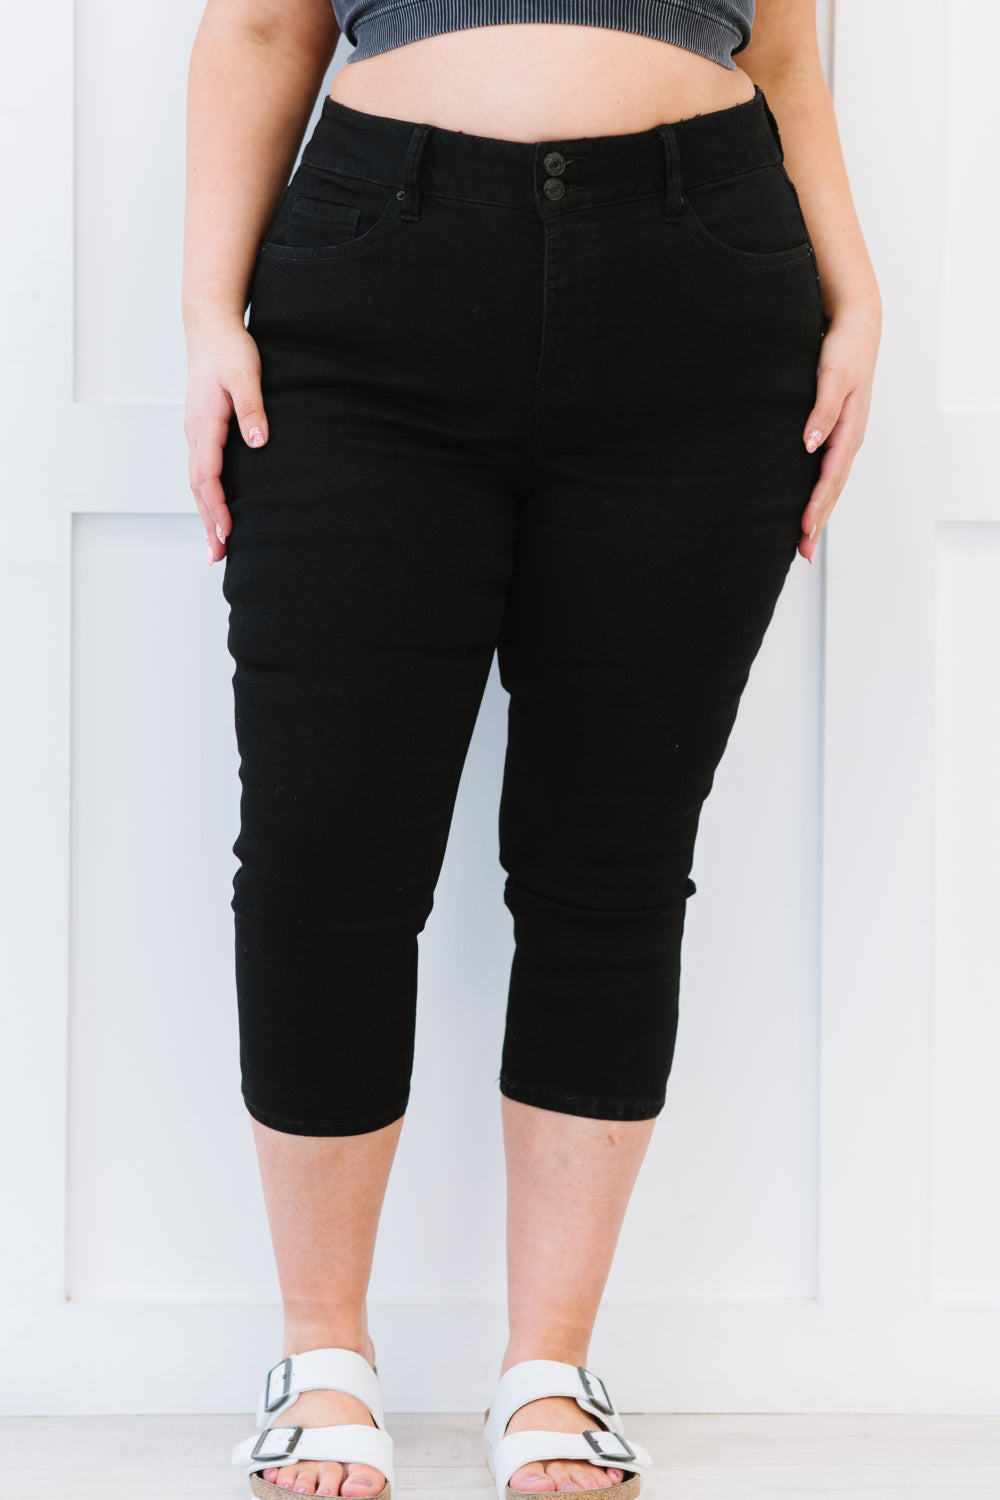 YMI Jeanswear Laura Petite Full Size Double-Button Denim Capris